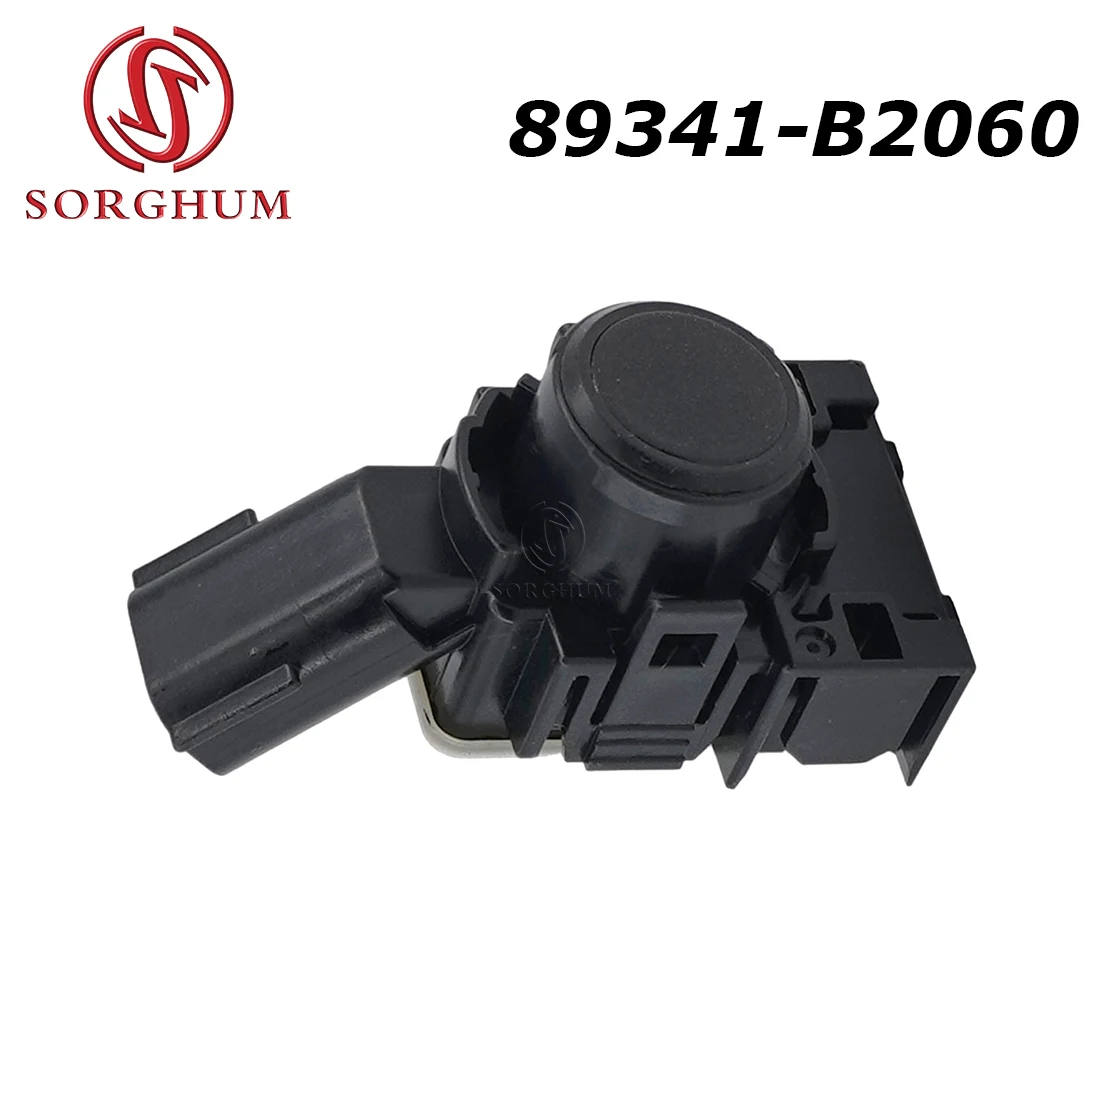 

SORGHUM 89341-B2060 PDC Parking Sensor Distance Assist Bumper For Daihatsu Ultrasonic Radar Aid System 89341B2060